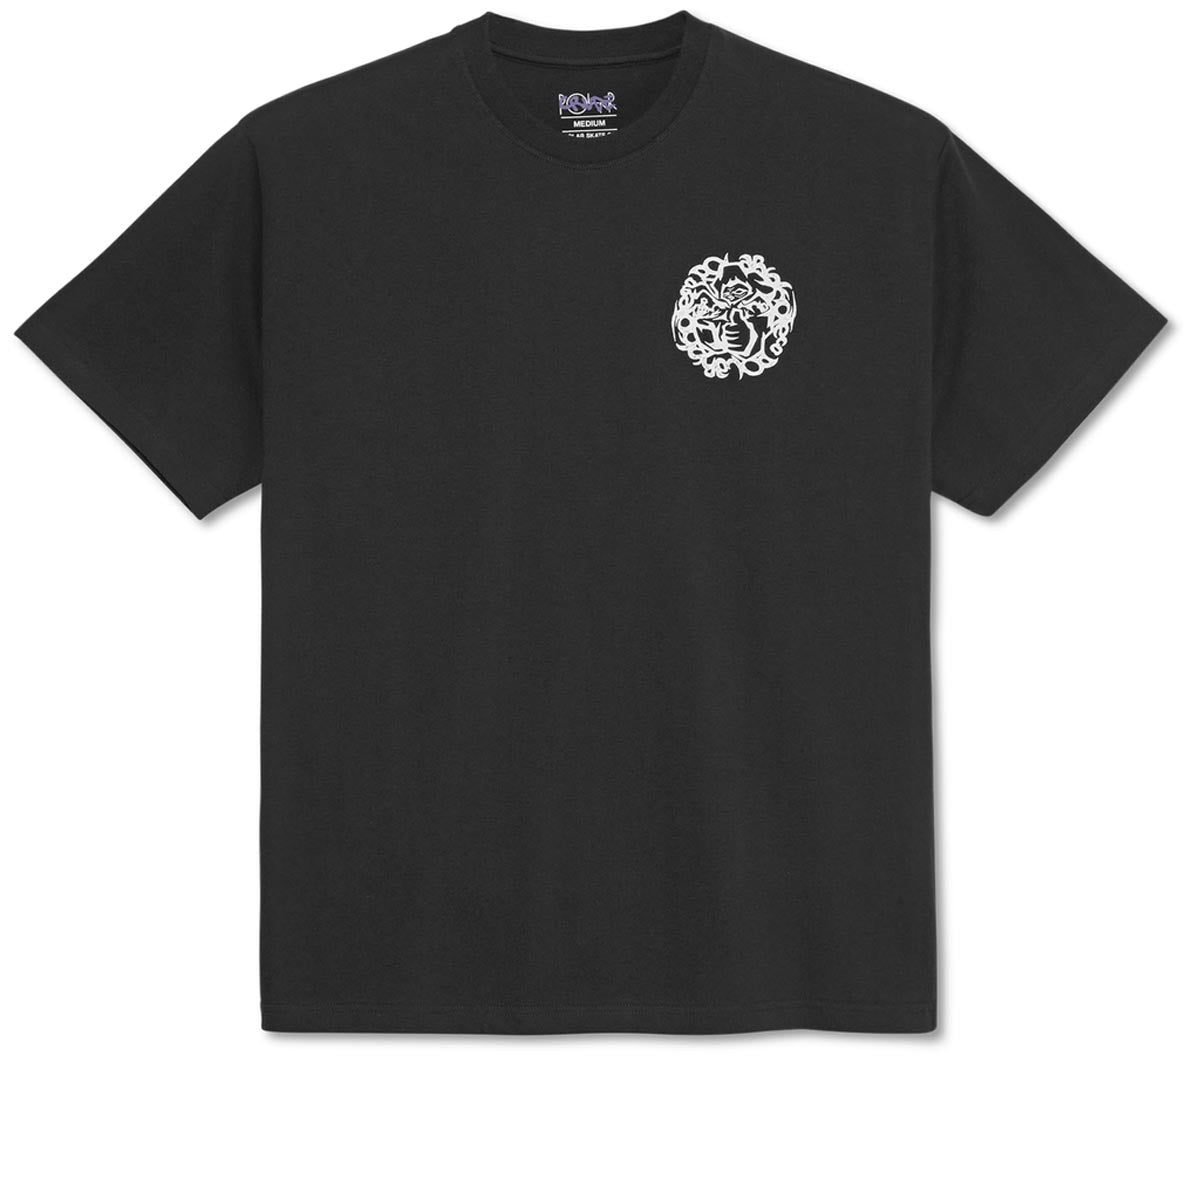 Polar Hijack T-Shirt - Black image 1